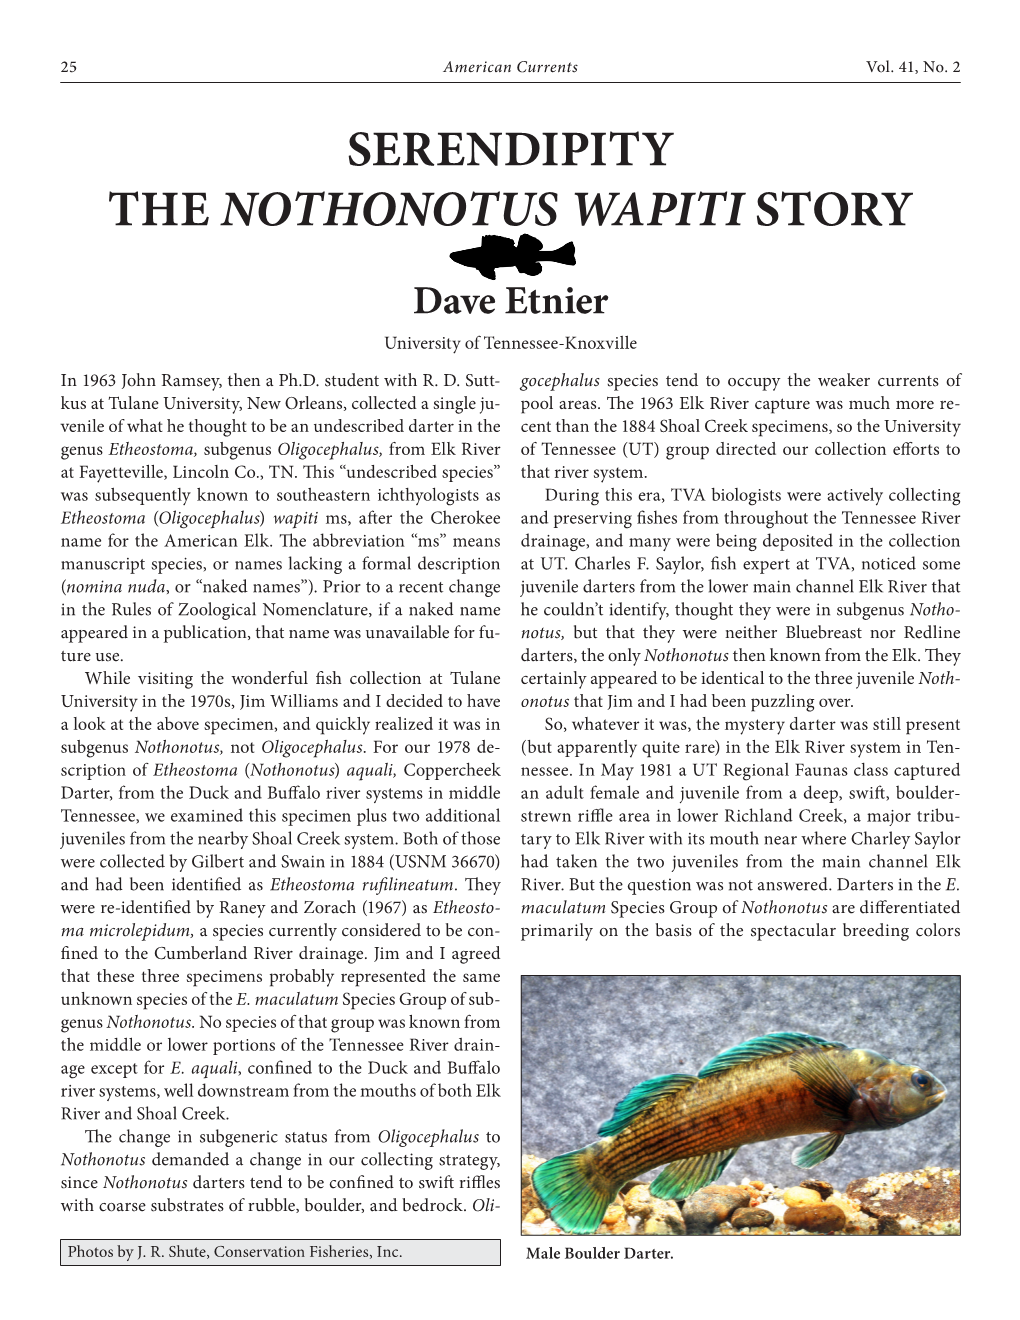 Serendipity the Nothonotus Wapiti Story